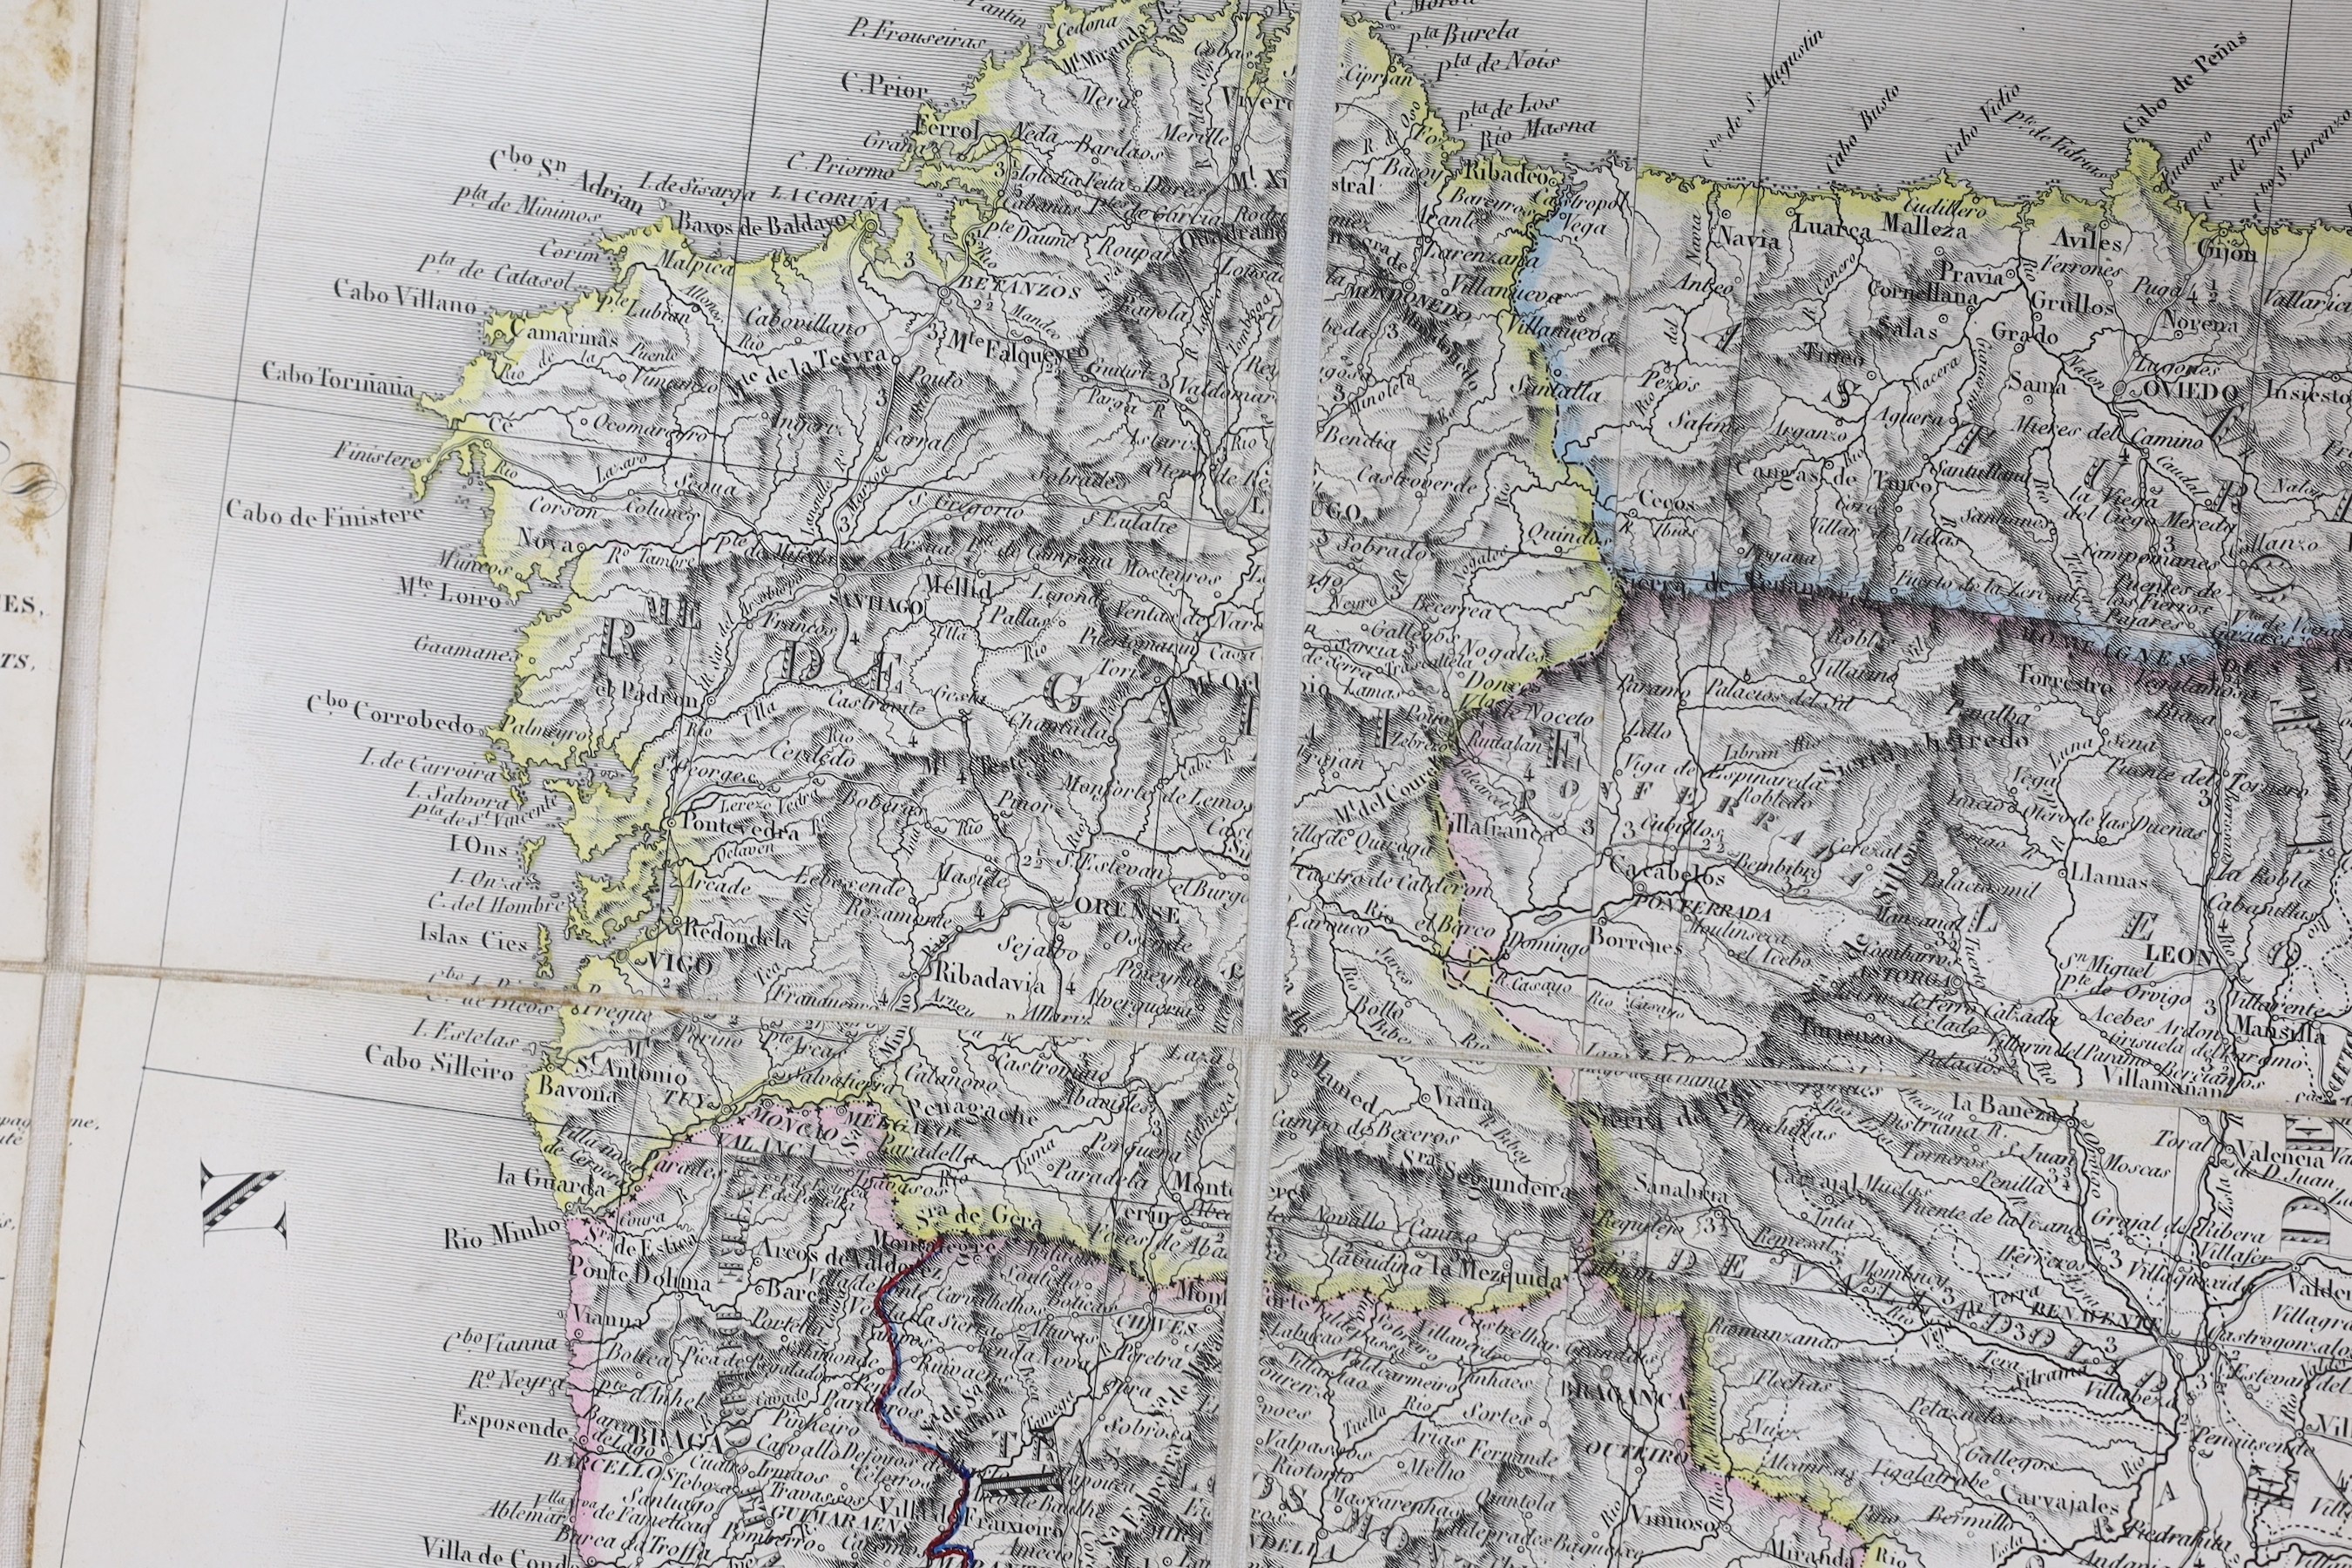 Wyld, James - Spain and Portugal, a set of 4 linen backed folding maps, coloured in outline, c.1820, 66 x 97.5cms., in worn slip case, together with Vivien de Saint-Martin, Louis - Carte des Royaumes d’Espagne et de Port